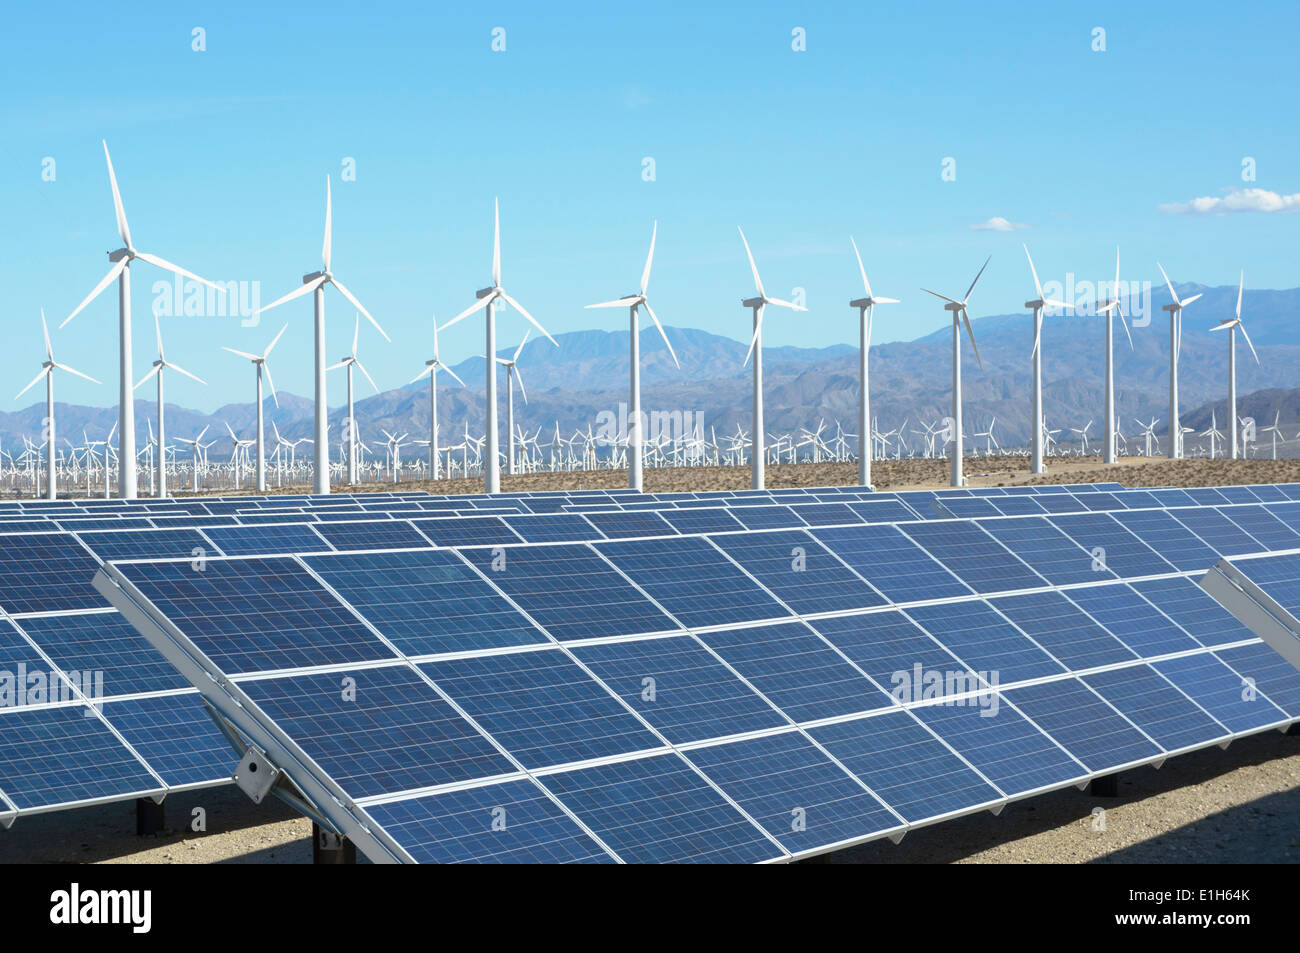 Photovoltaic solar panels and wind turbines, San Gorgonio Pass Wind Farm, Palm Springs, California, USA Stock Photo